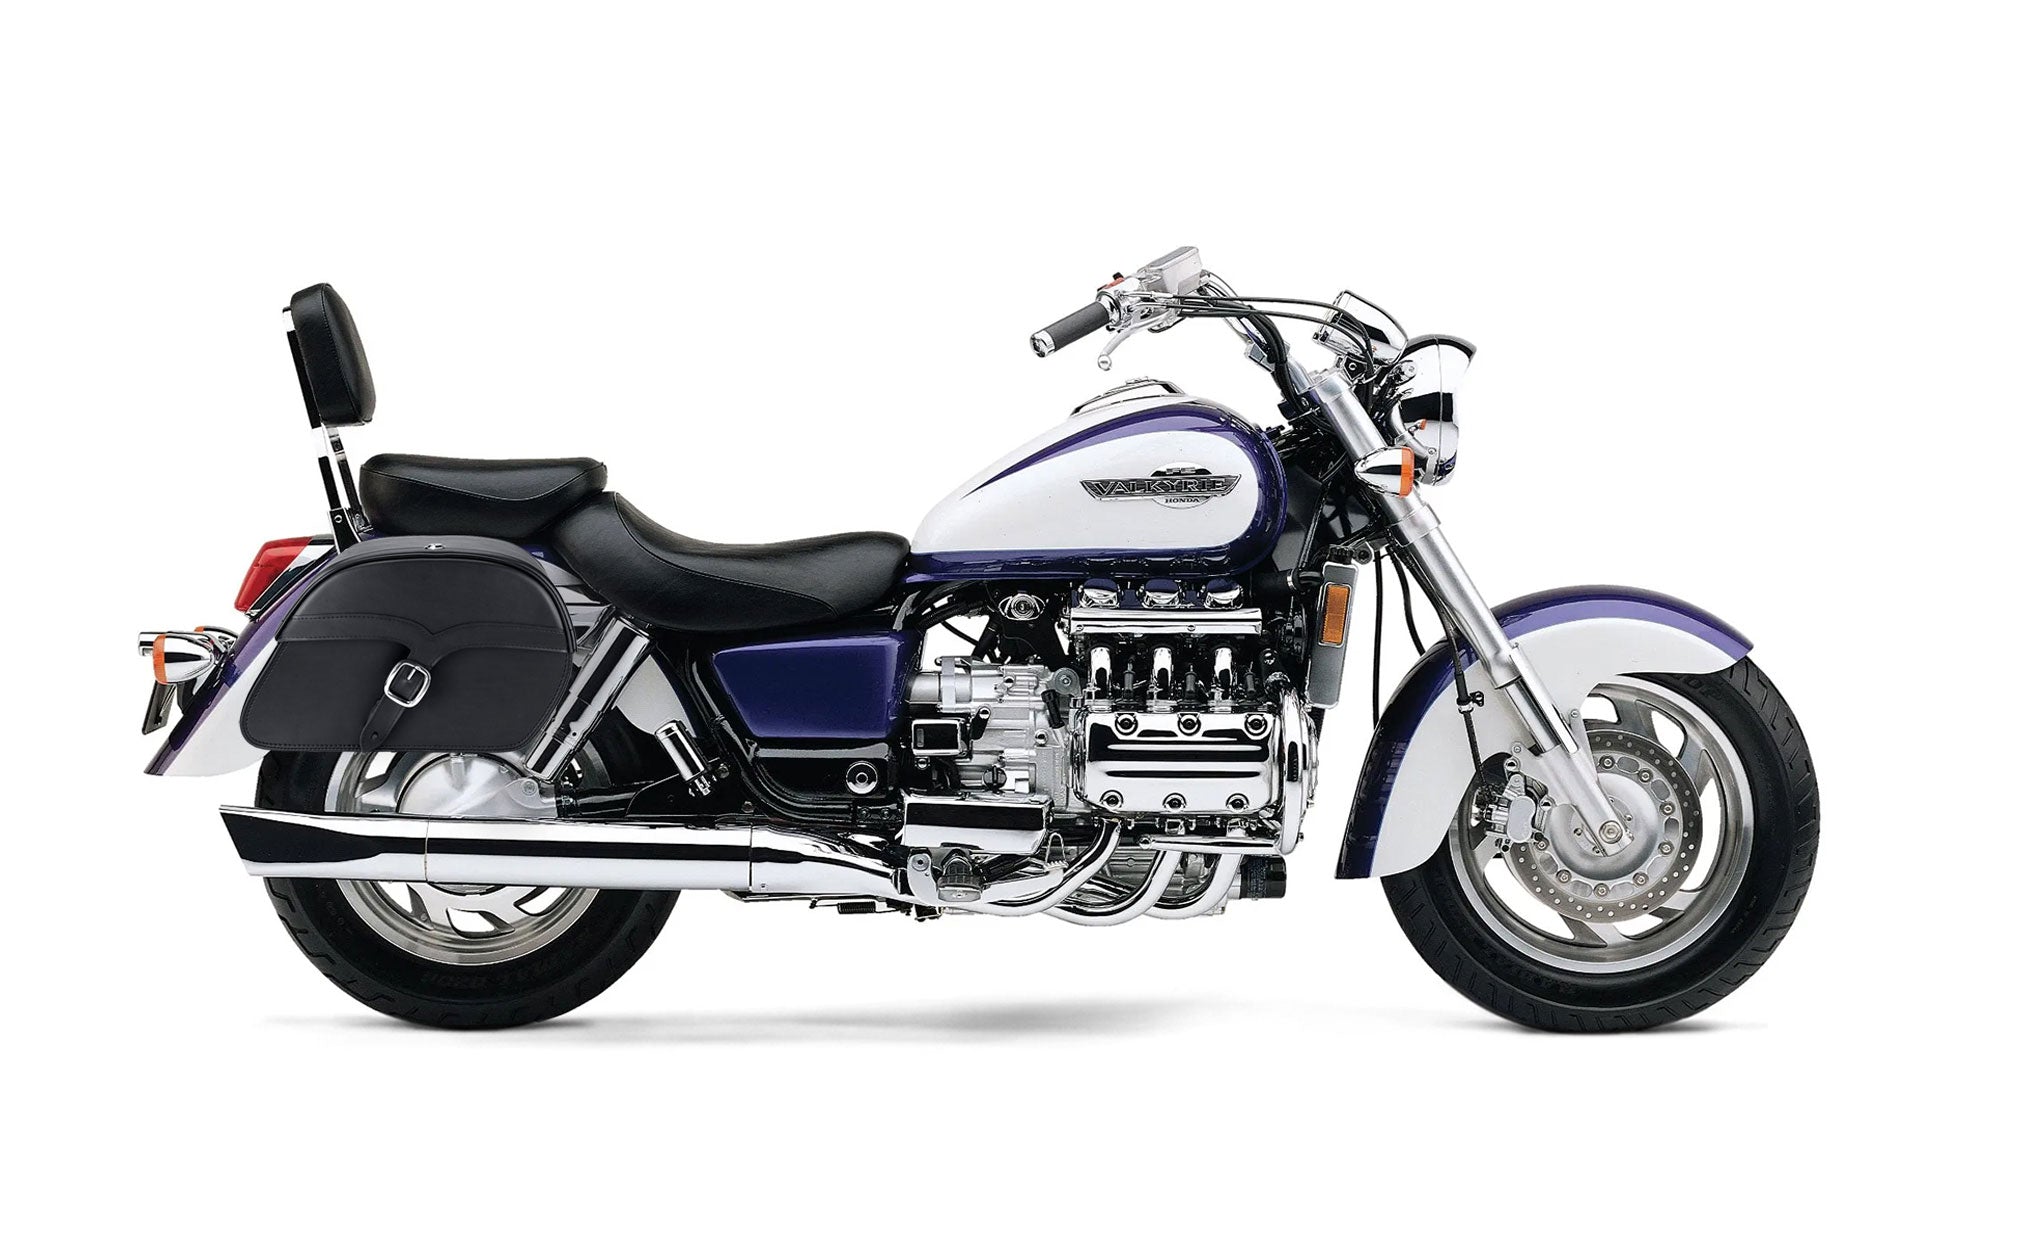 Viking Vintage Medium Honda Valkyrie 1500 Interstate Leather Motorcycle Saddlebags on Bike Photo @expand